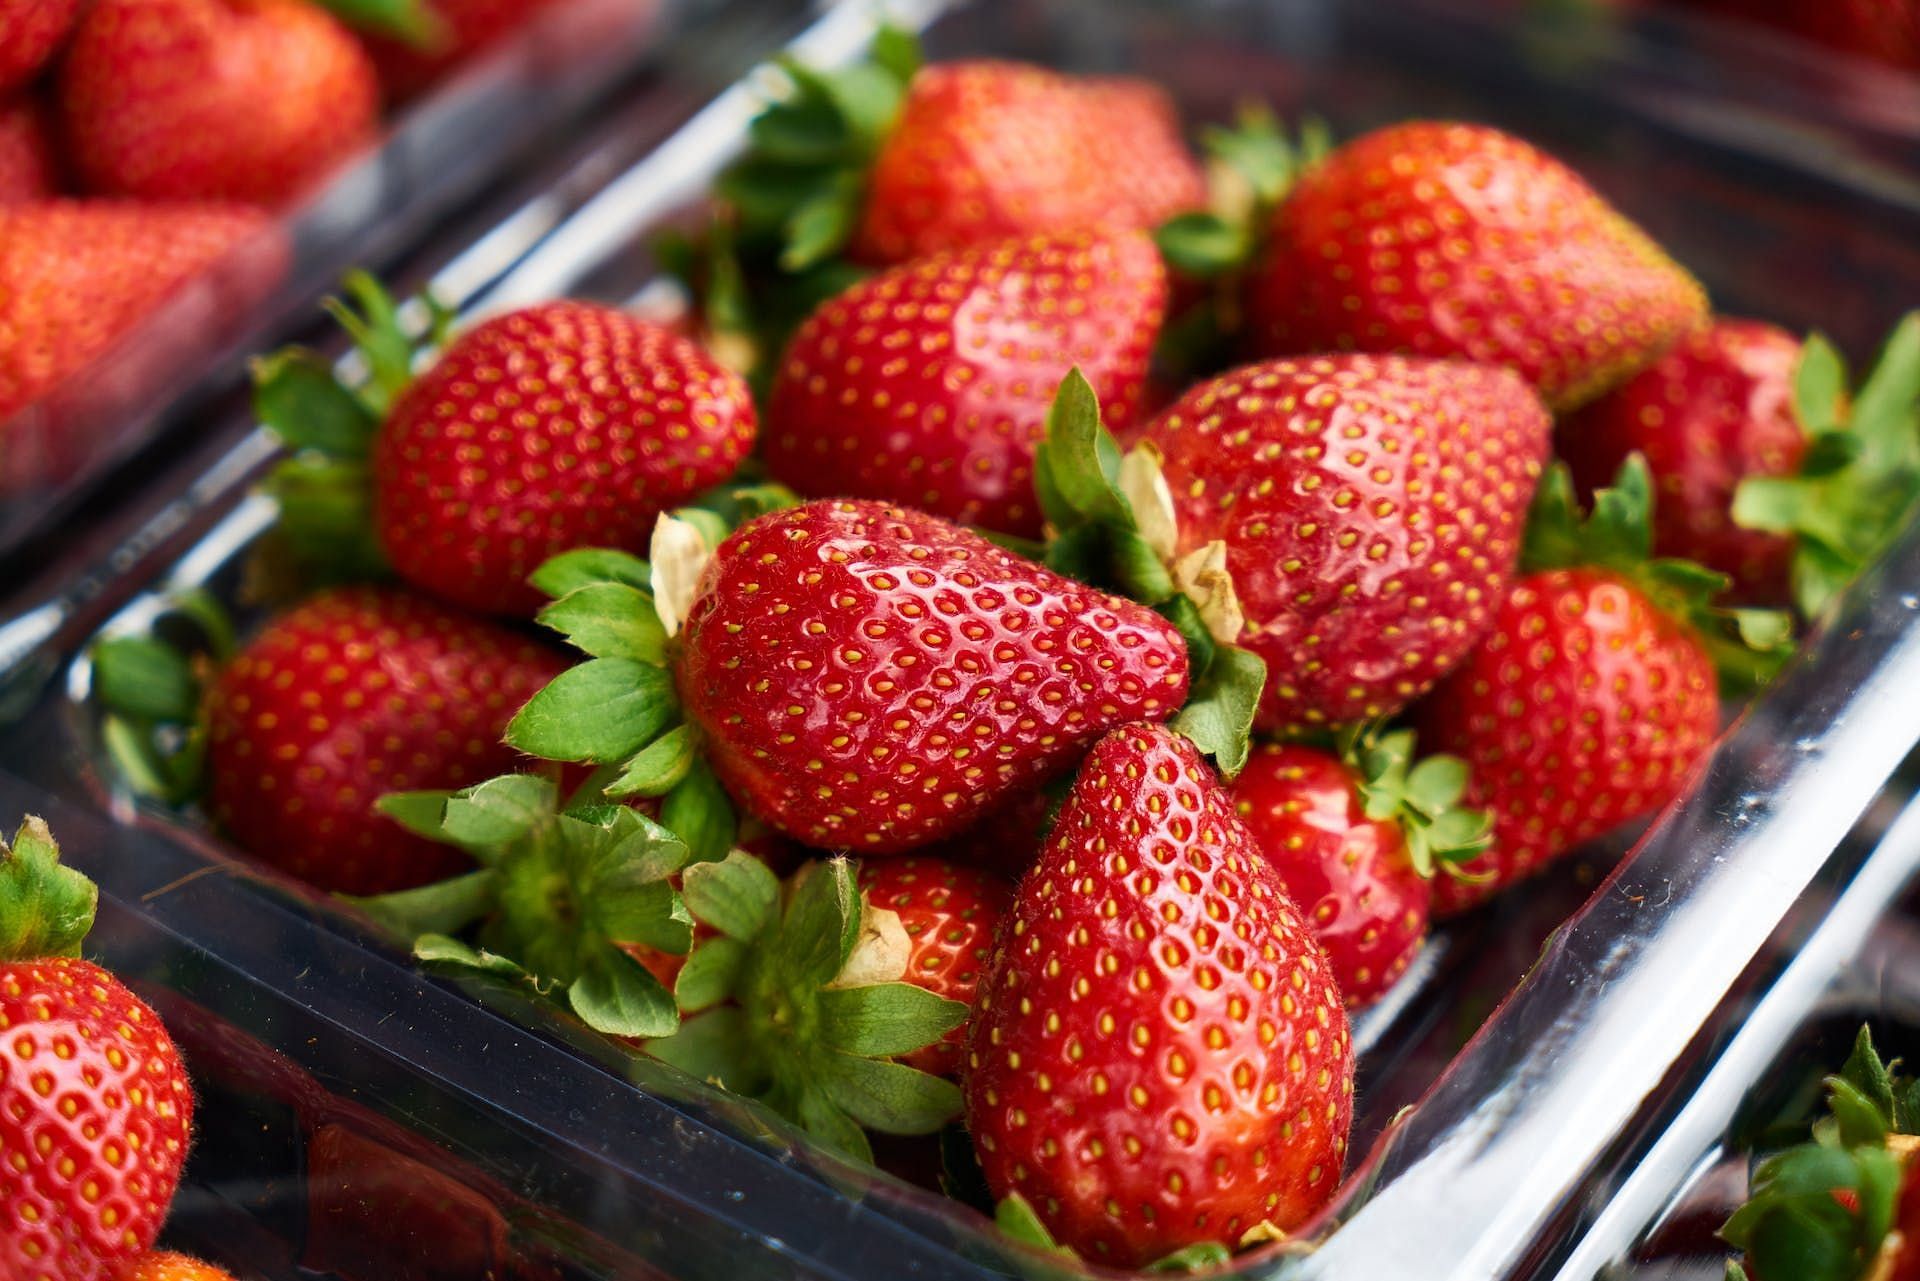 Strawberries (Image via Pexels/Engin Akyurt)